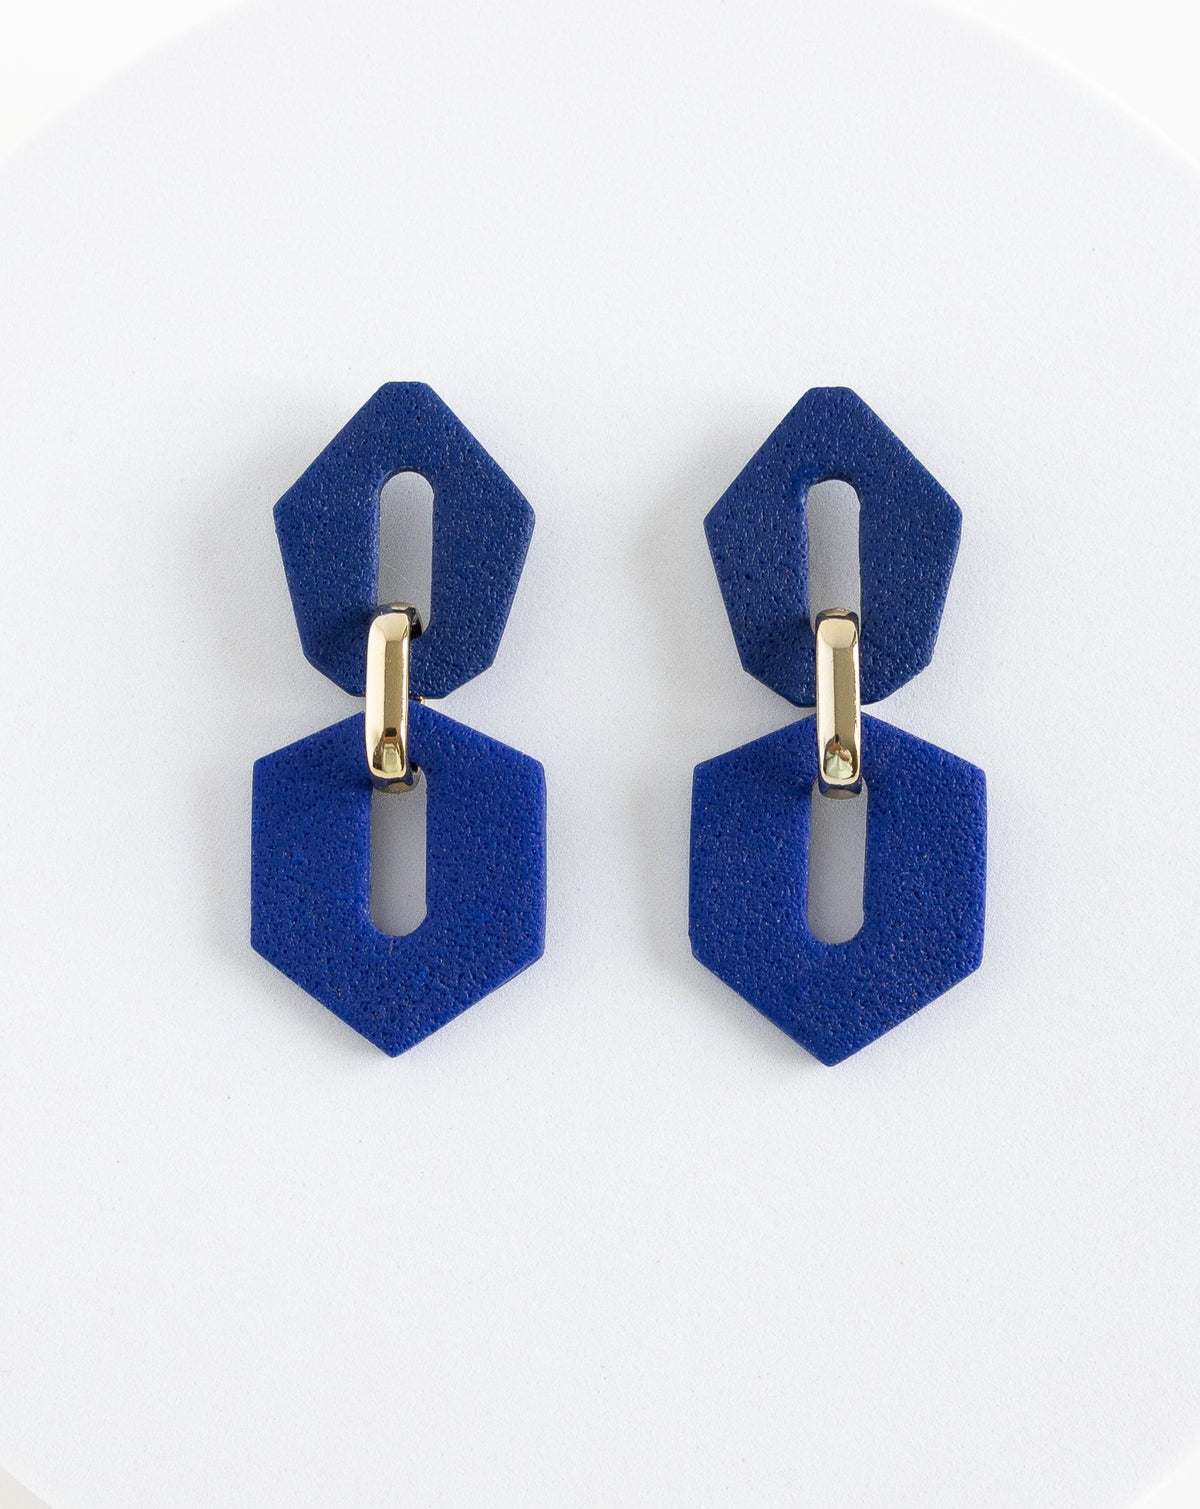 LYHO exclusive design, Shilla earrings in Hue Blue color.